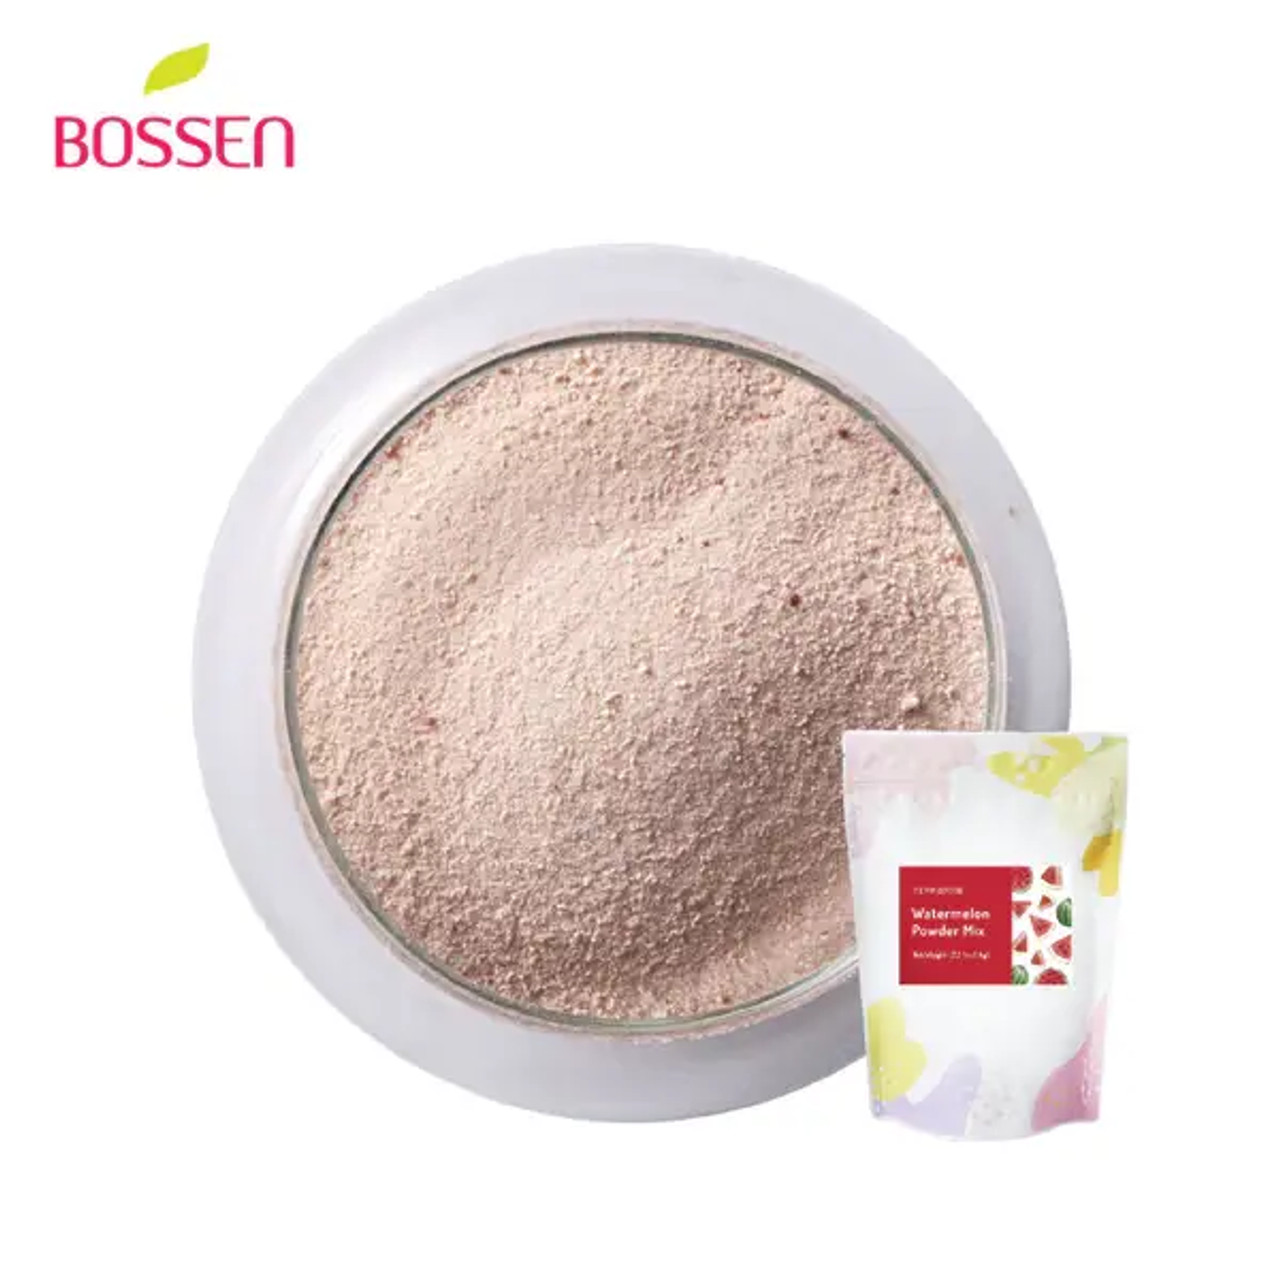 Bossen 2.2 lb. (1 kg) Bubble Tea Watermelon Powder Mix | Refreshing Sweet Flavor(10/Case)-Chicken Pieces